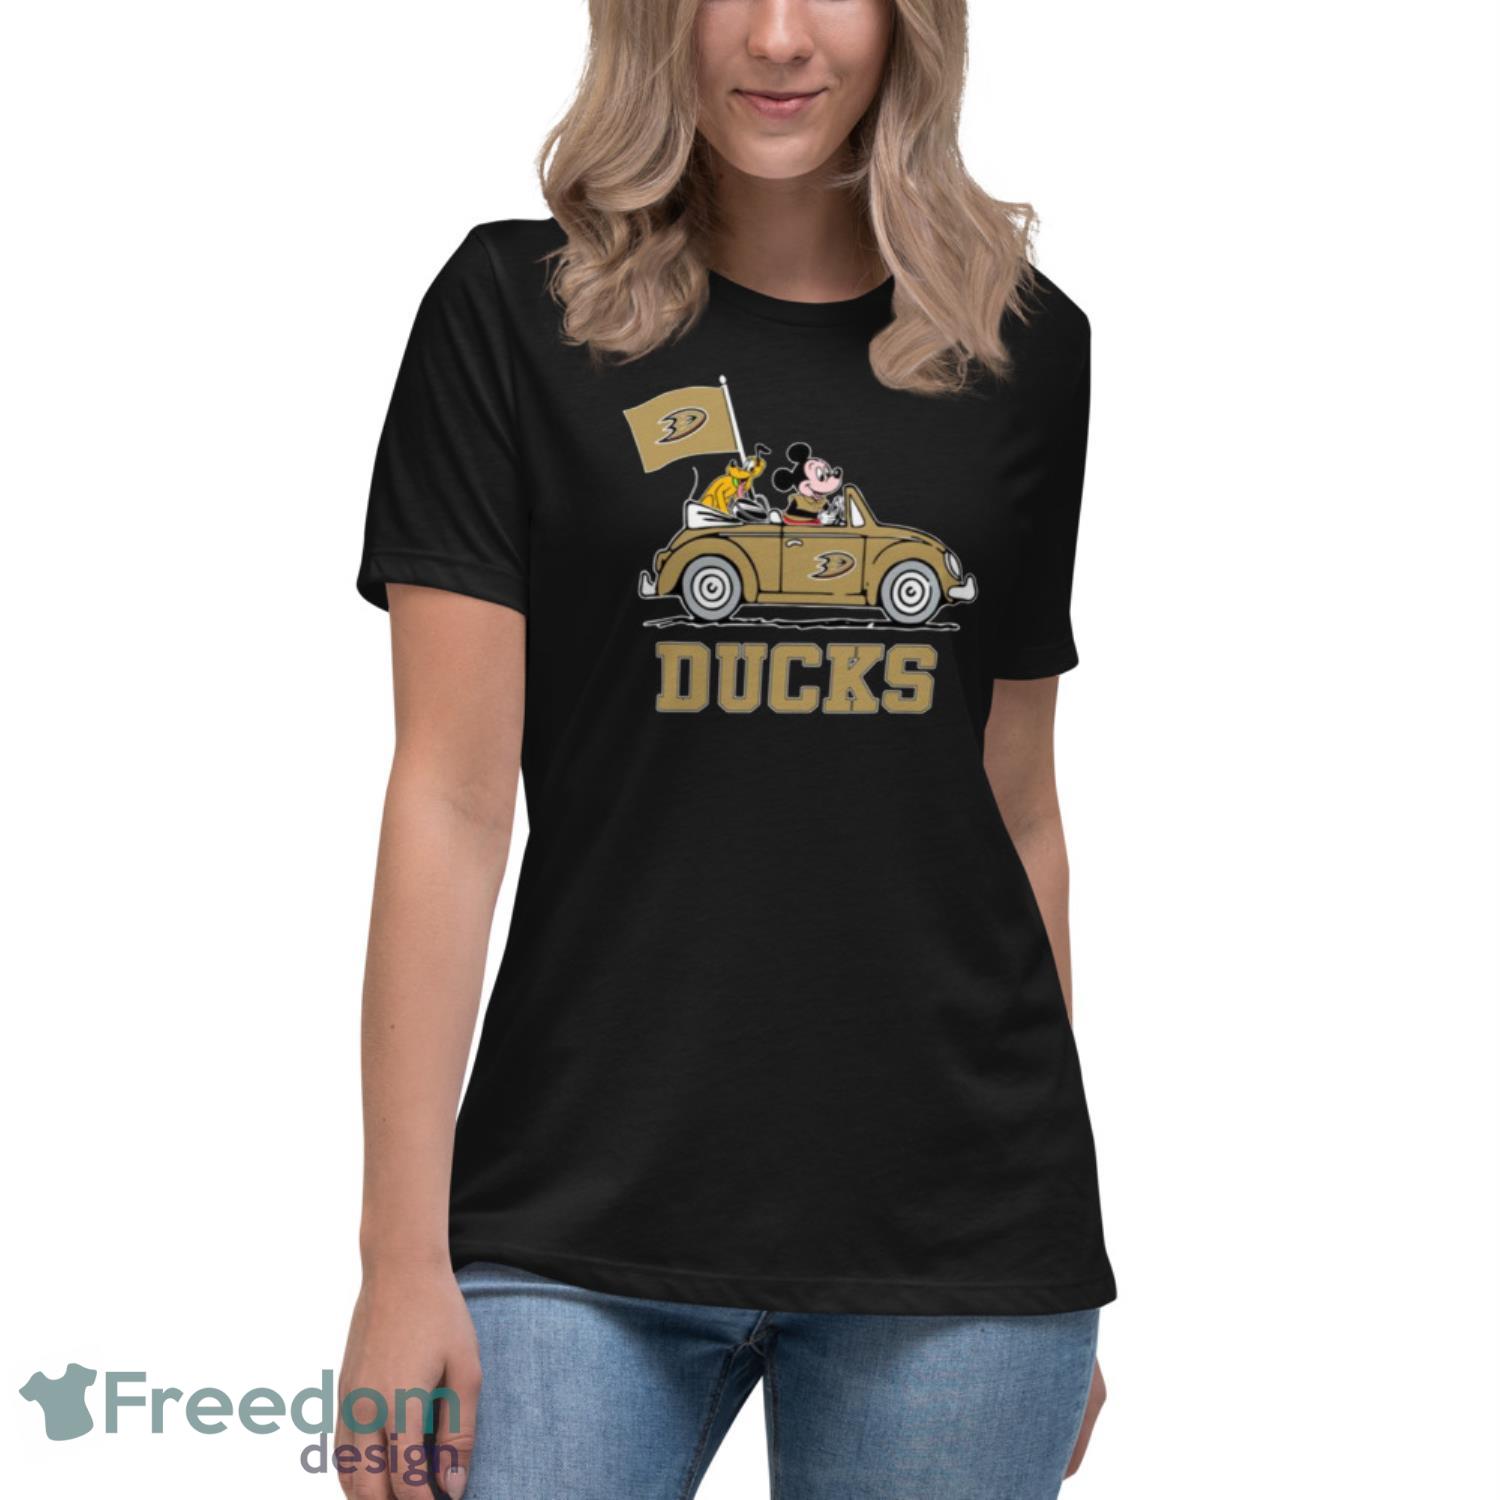 NHL Anaheim Ducks Mickey Mouse Disney Hockey T Shirt Tank Top